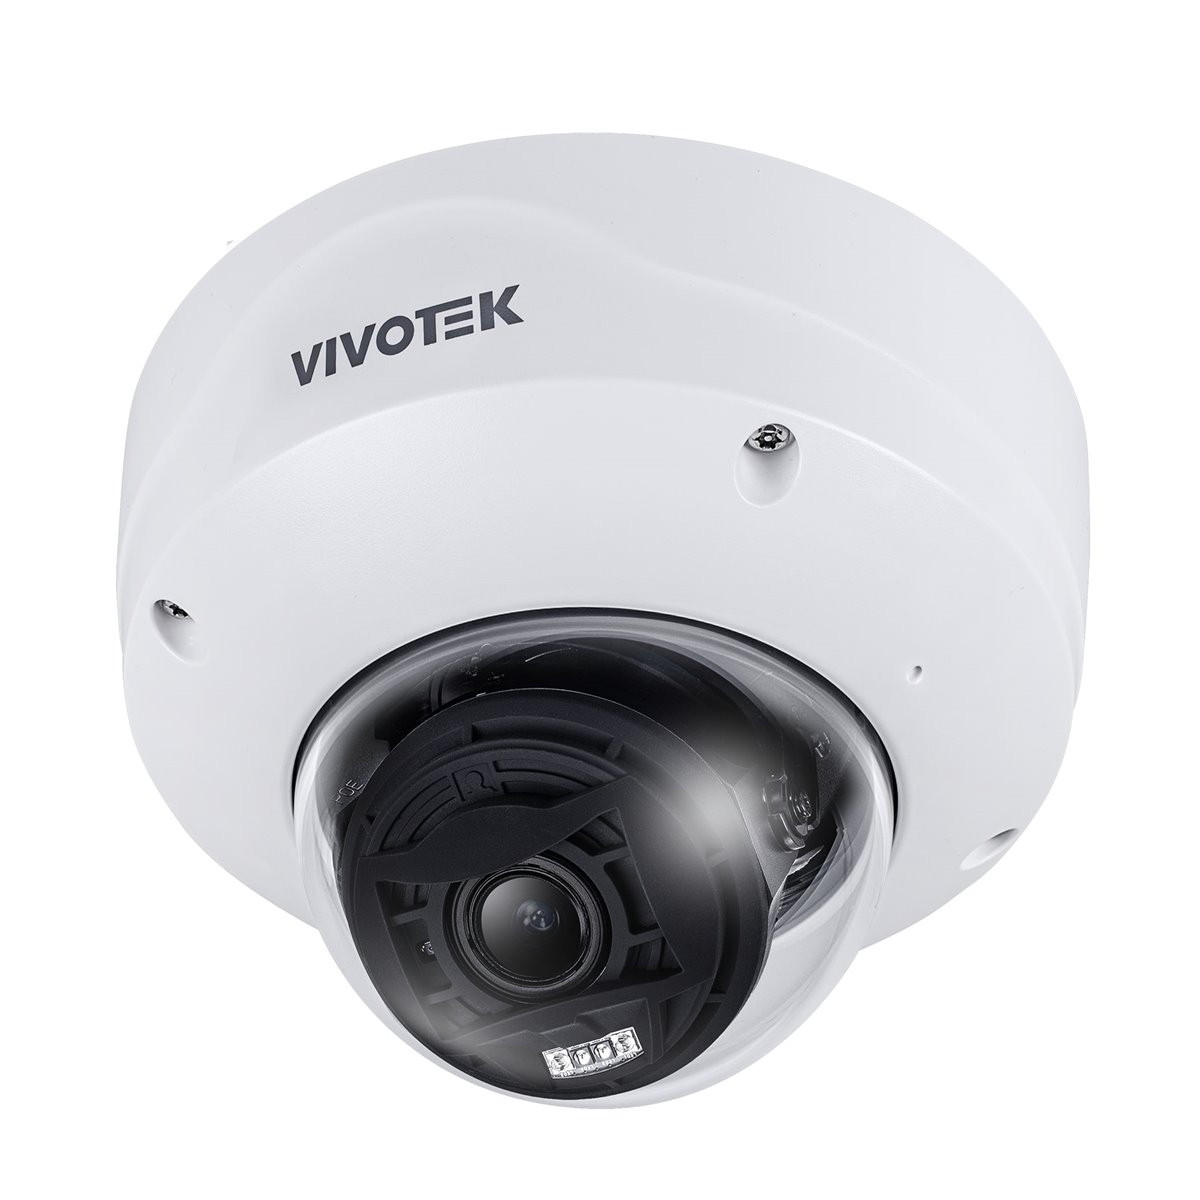 VIVOTEK V-SERIE FD9187-HT-V3 Fixed Dome IP-Kamera 5MP Indoor 2.7-13.5mm - Network Camera